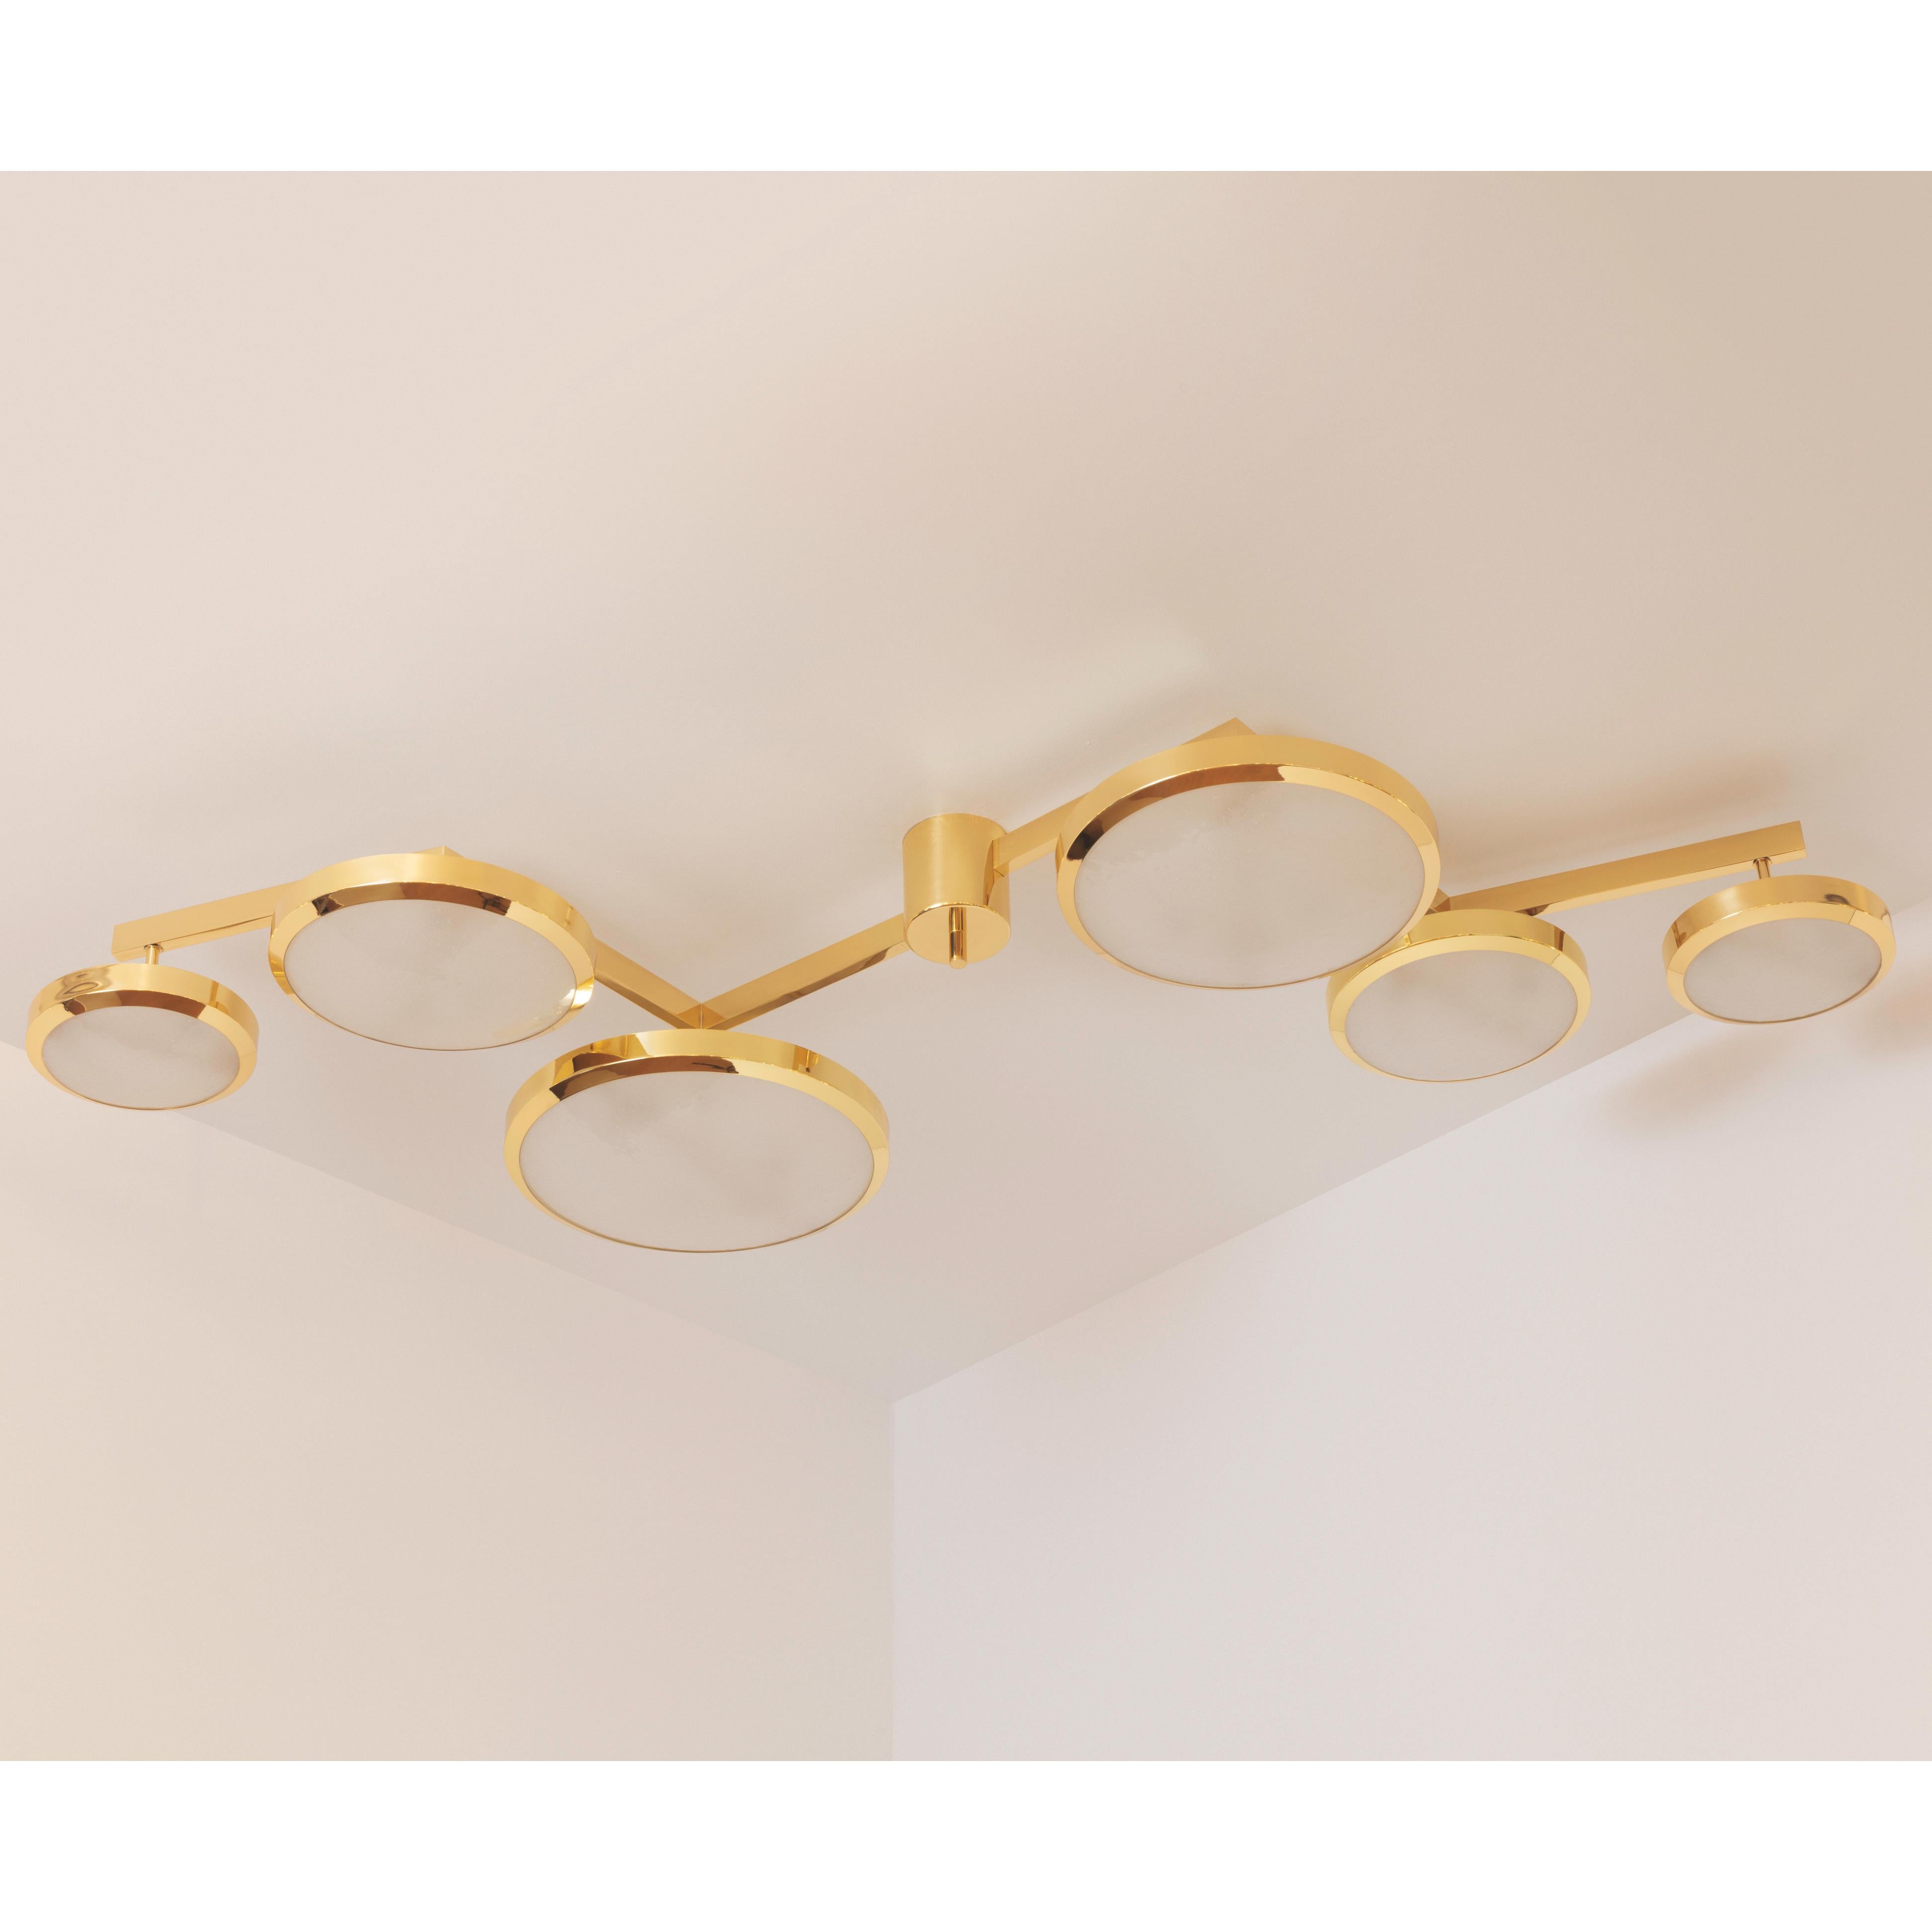 Contemporary Geometria Sospesa Ceiling Light by Gaspare Asaro - Polished Brass For Sale